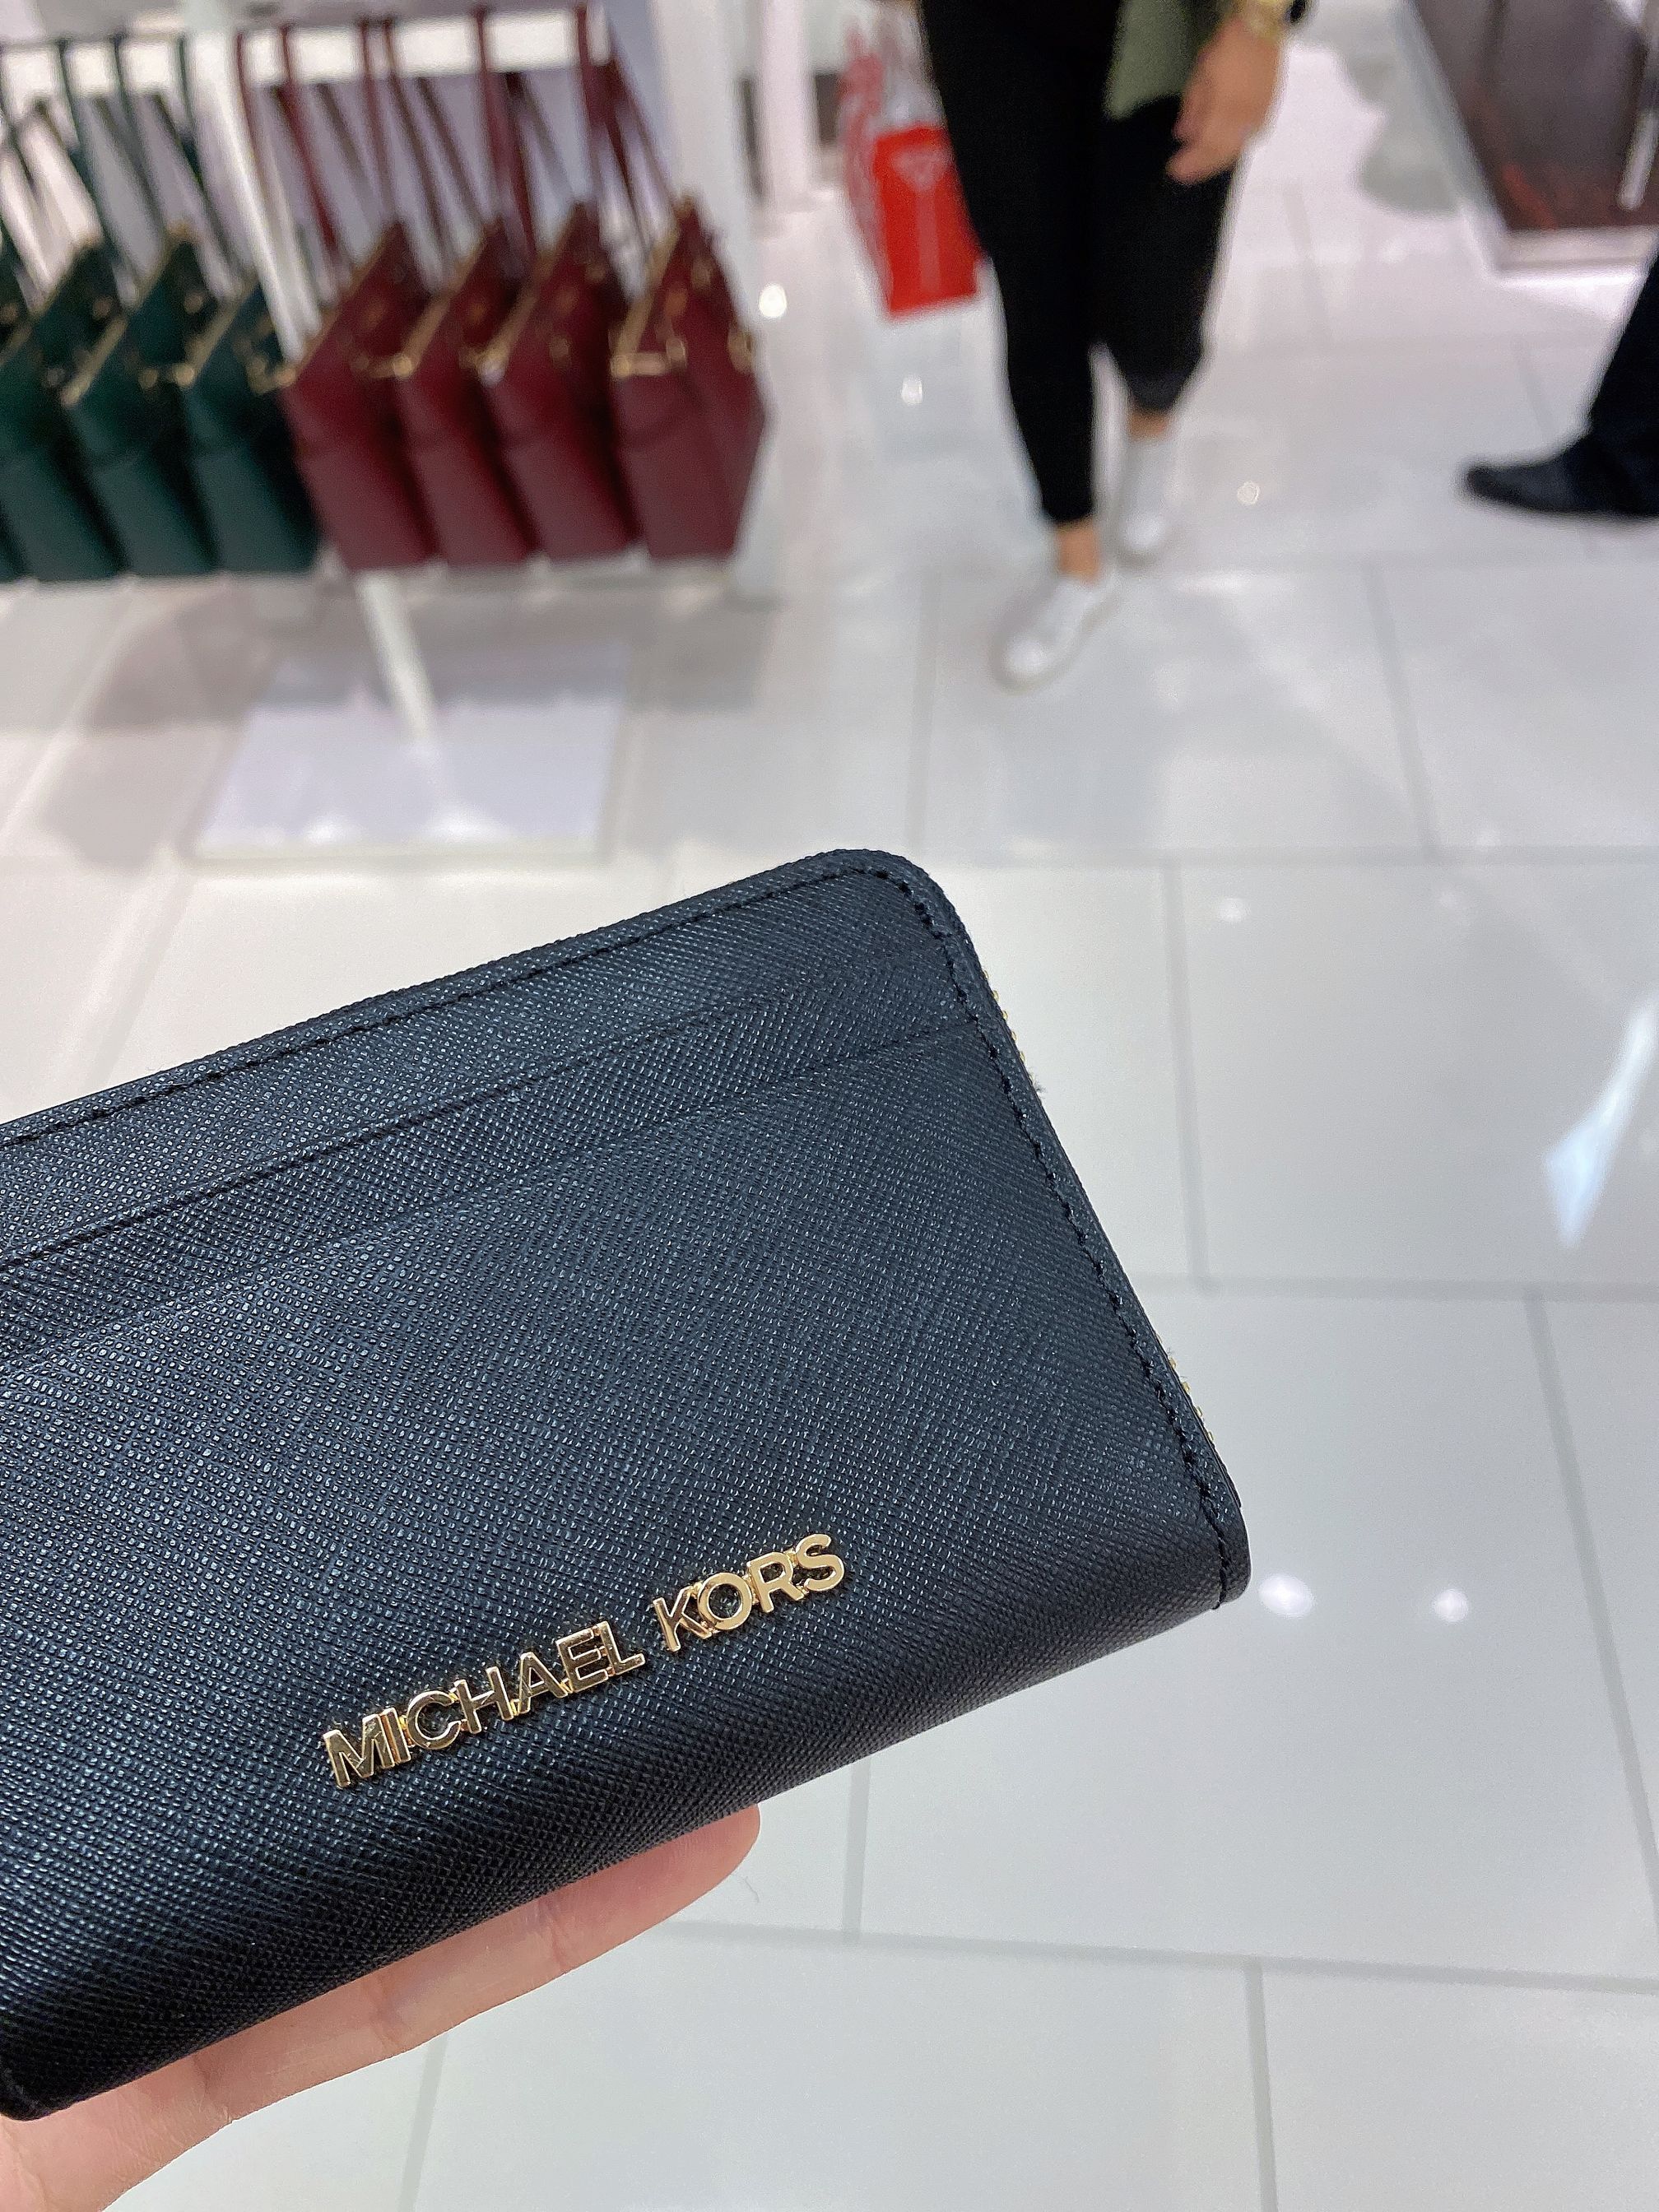 MICHAEL KORS Jet Set Medium Zip Around Leather Card Case Wallet Black Gold - image 2 of 3